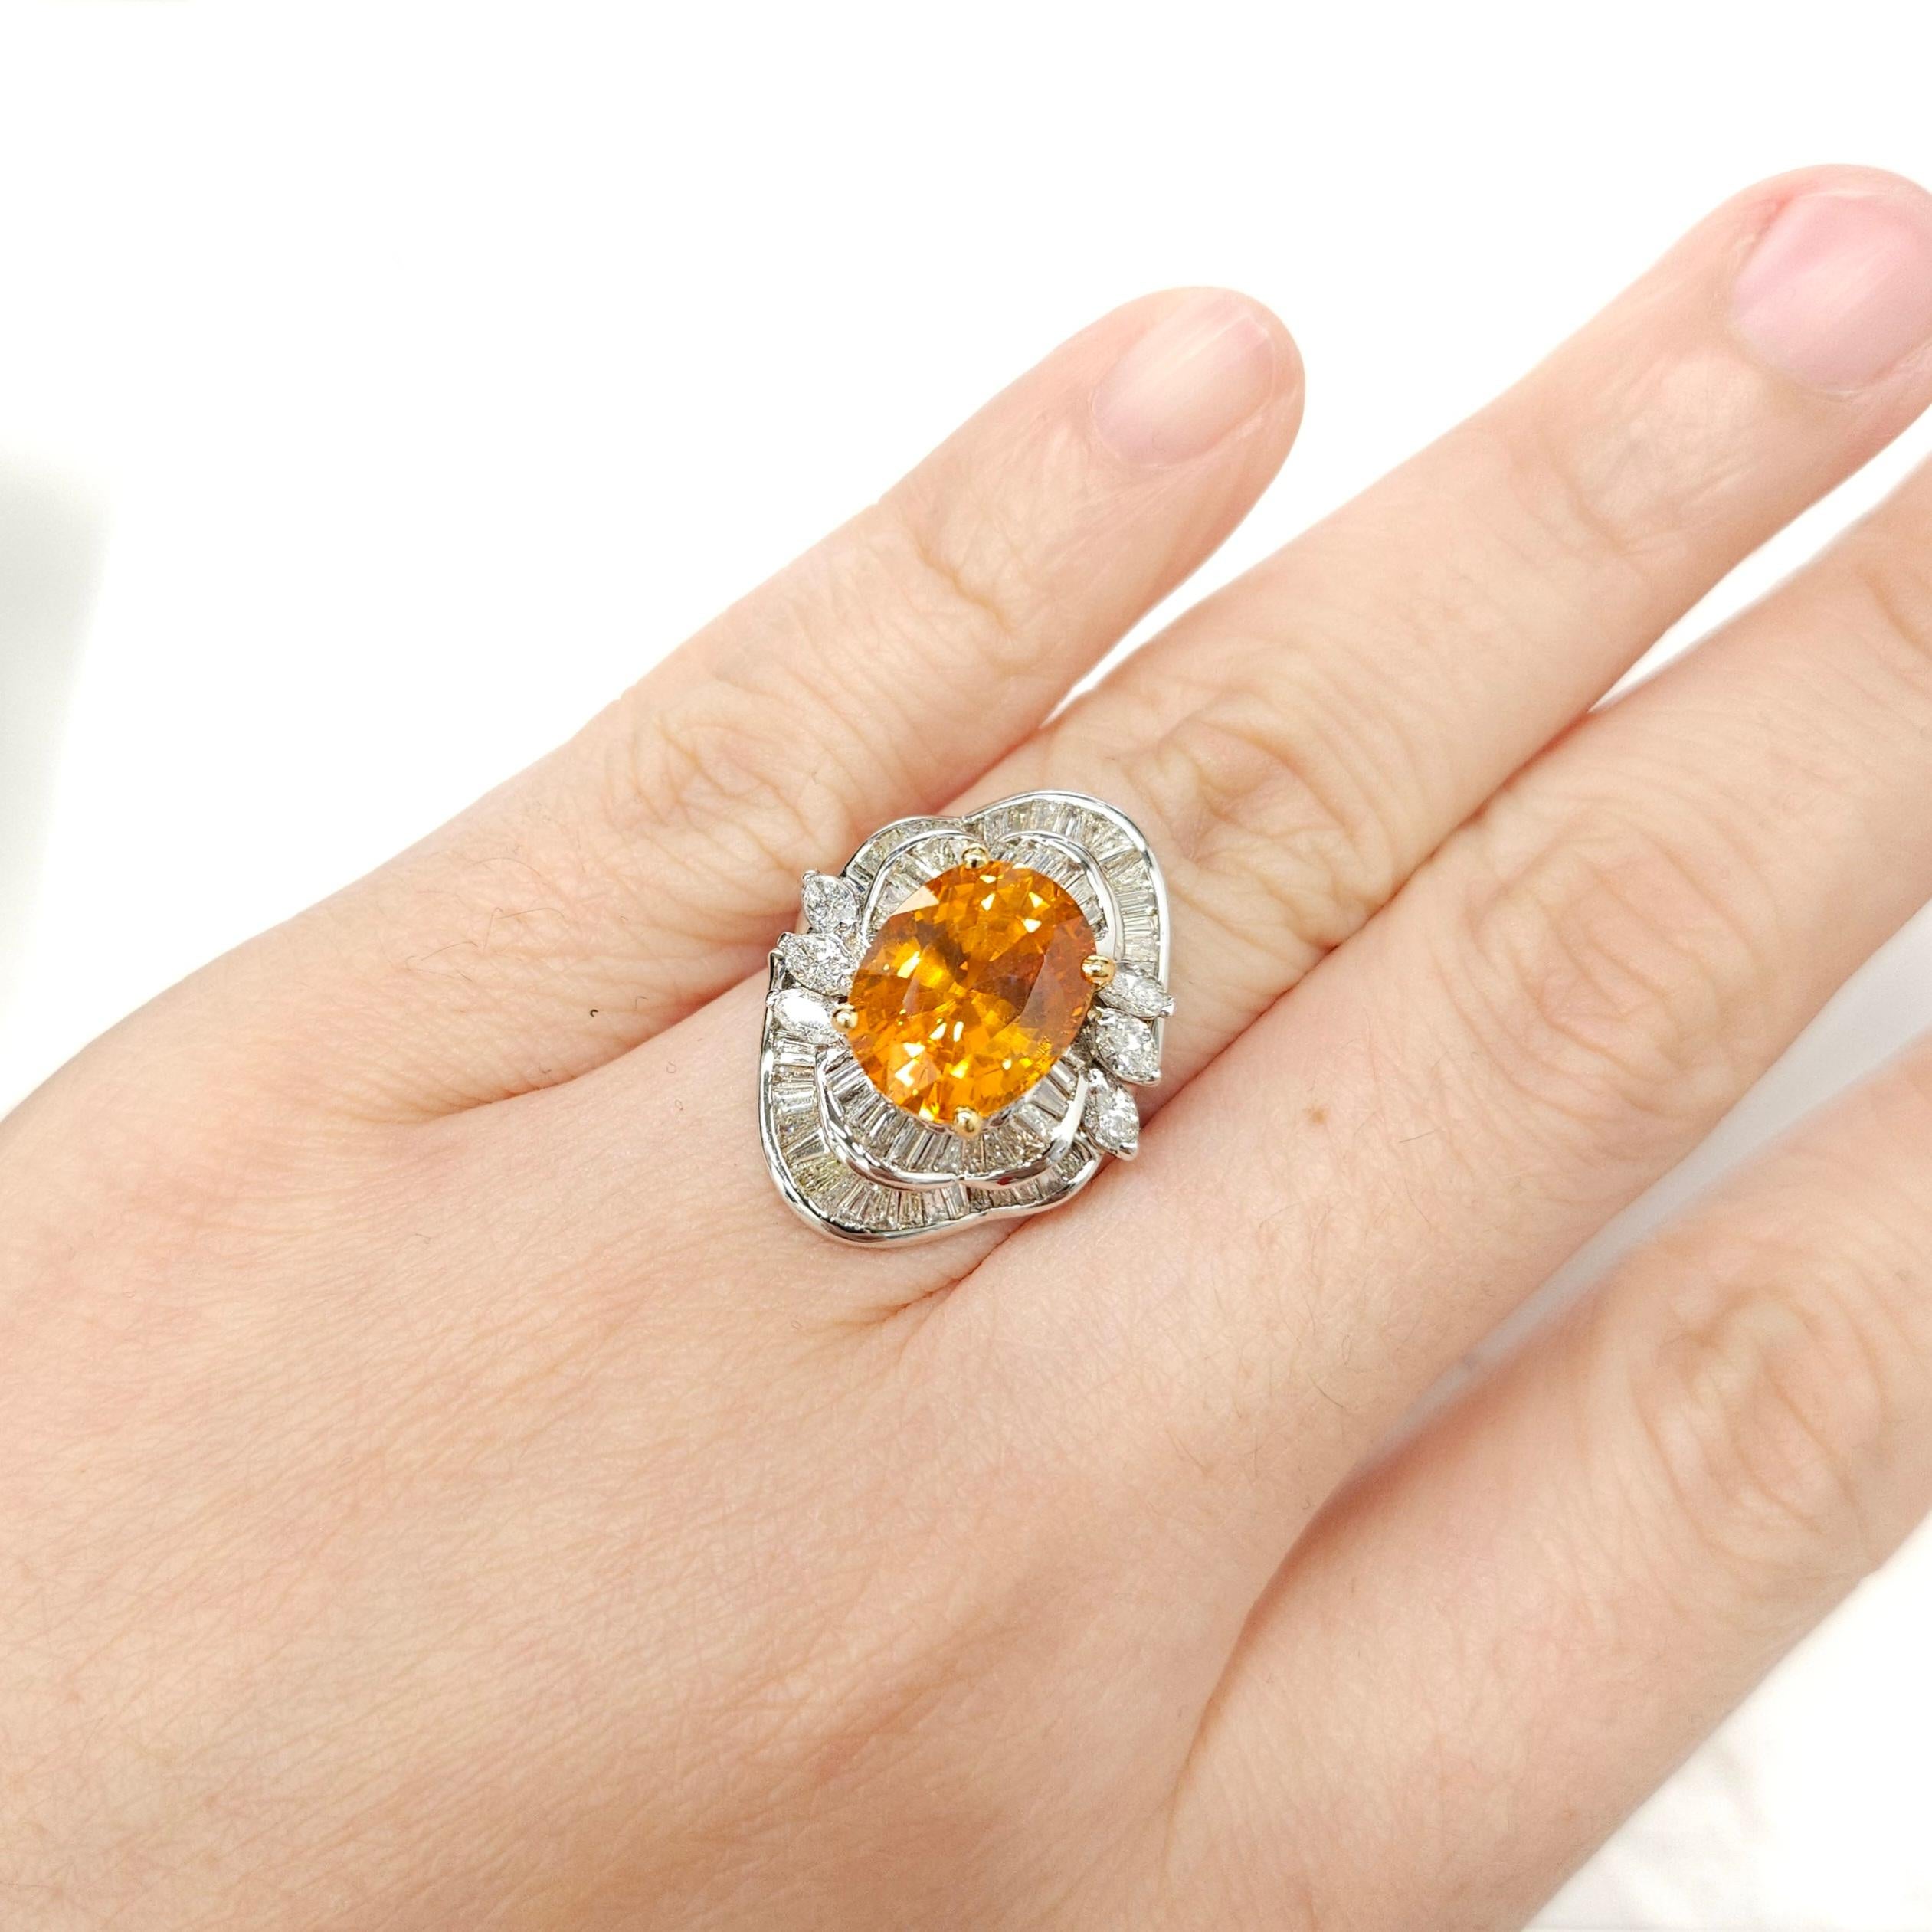 IGI Certified 6.08Carat Ceylon Orange Sapphire & Diamond Ring in 18K White Gold For Sale 2